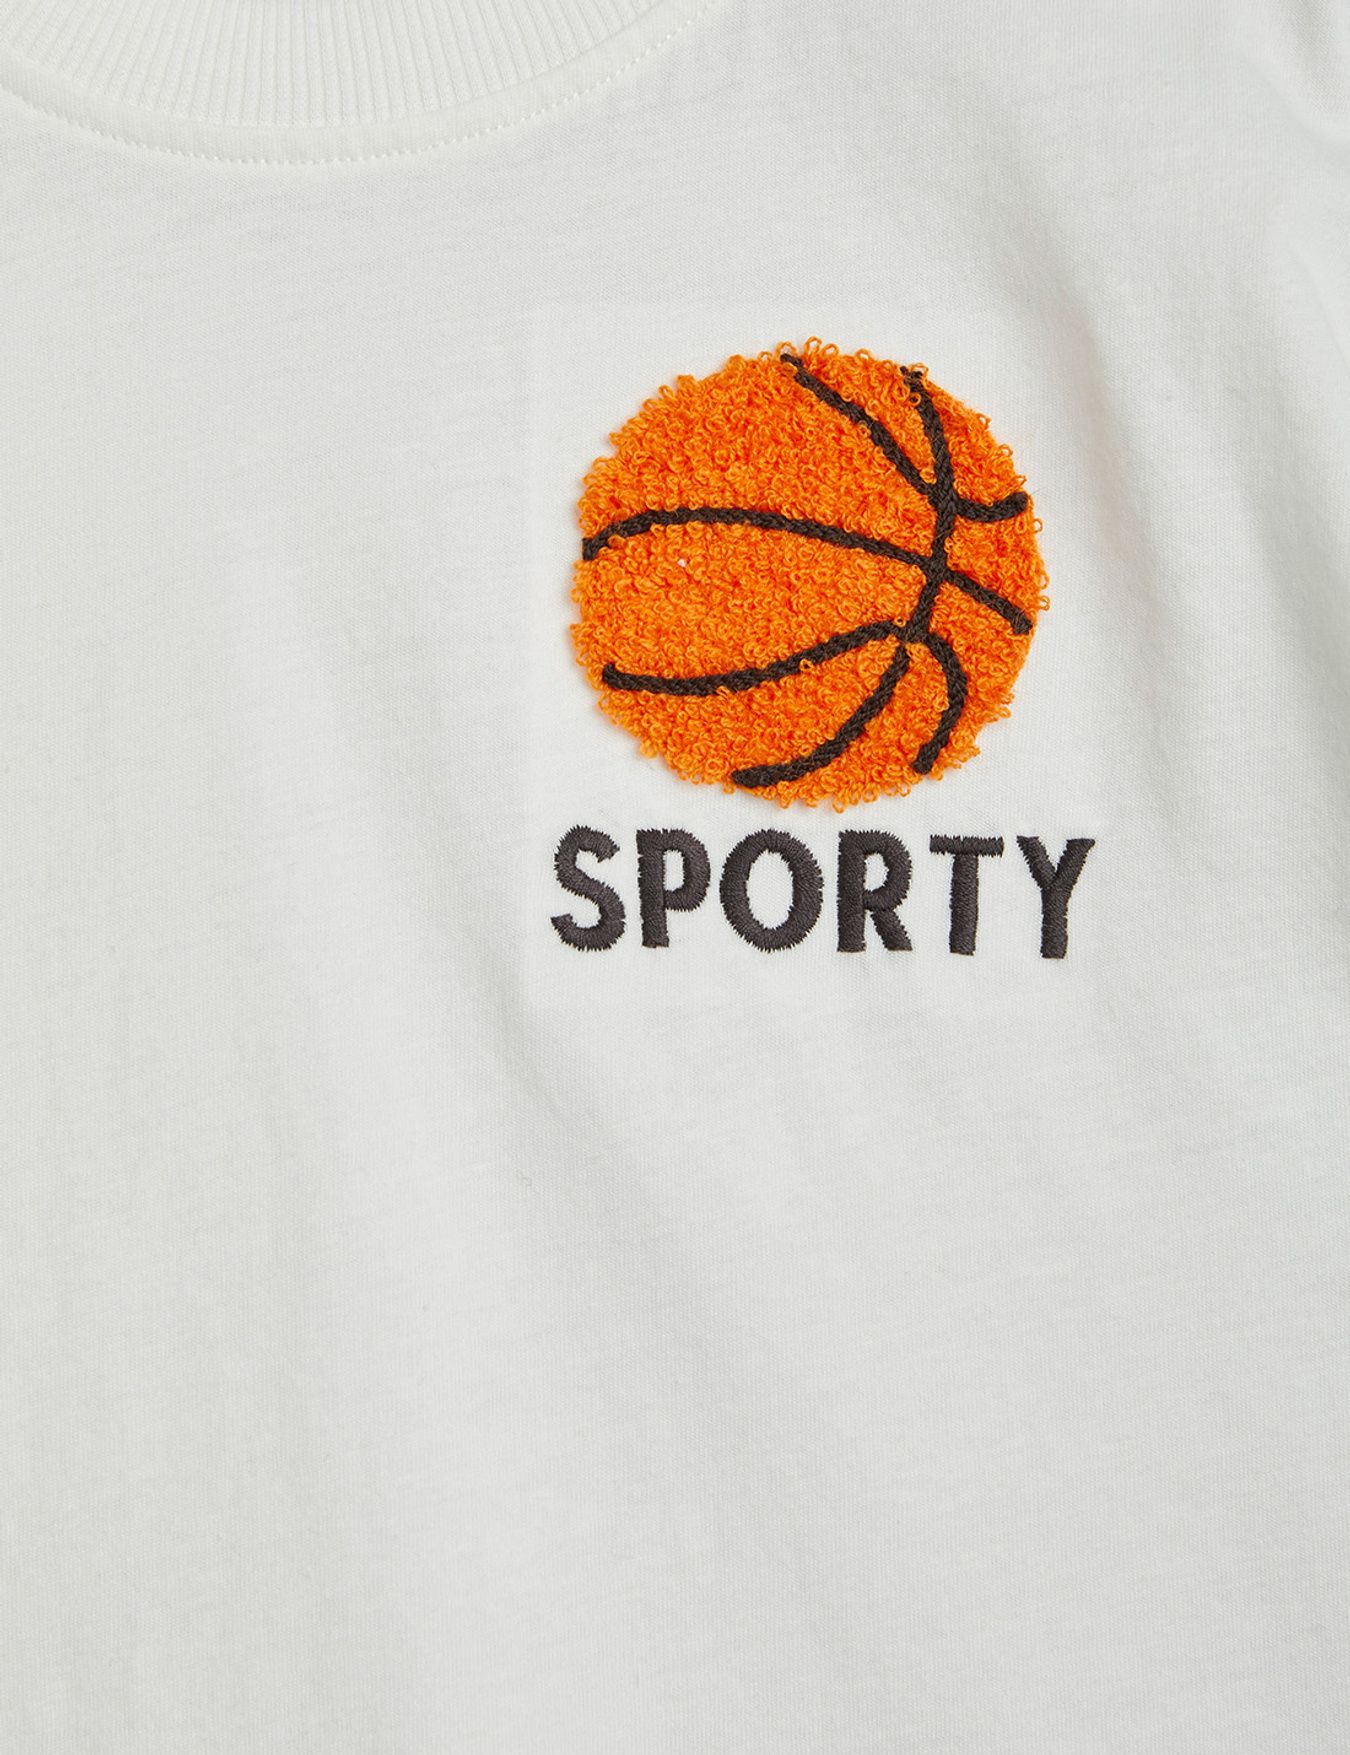 Mini Rodini - Basketball Embroidered T-Shirt